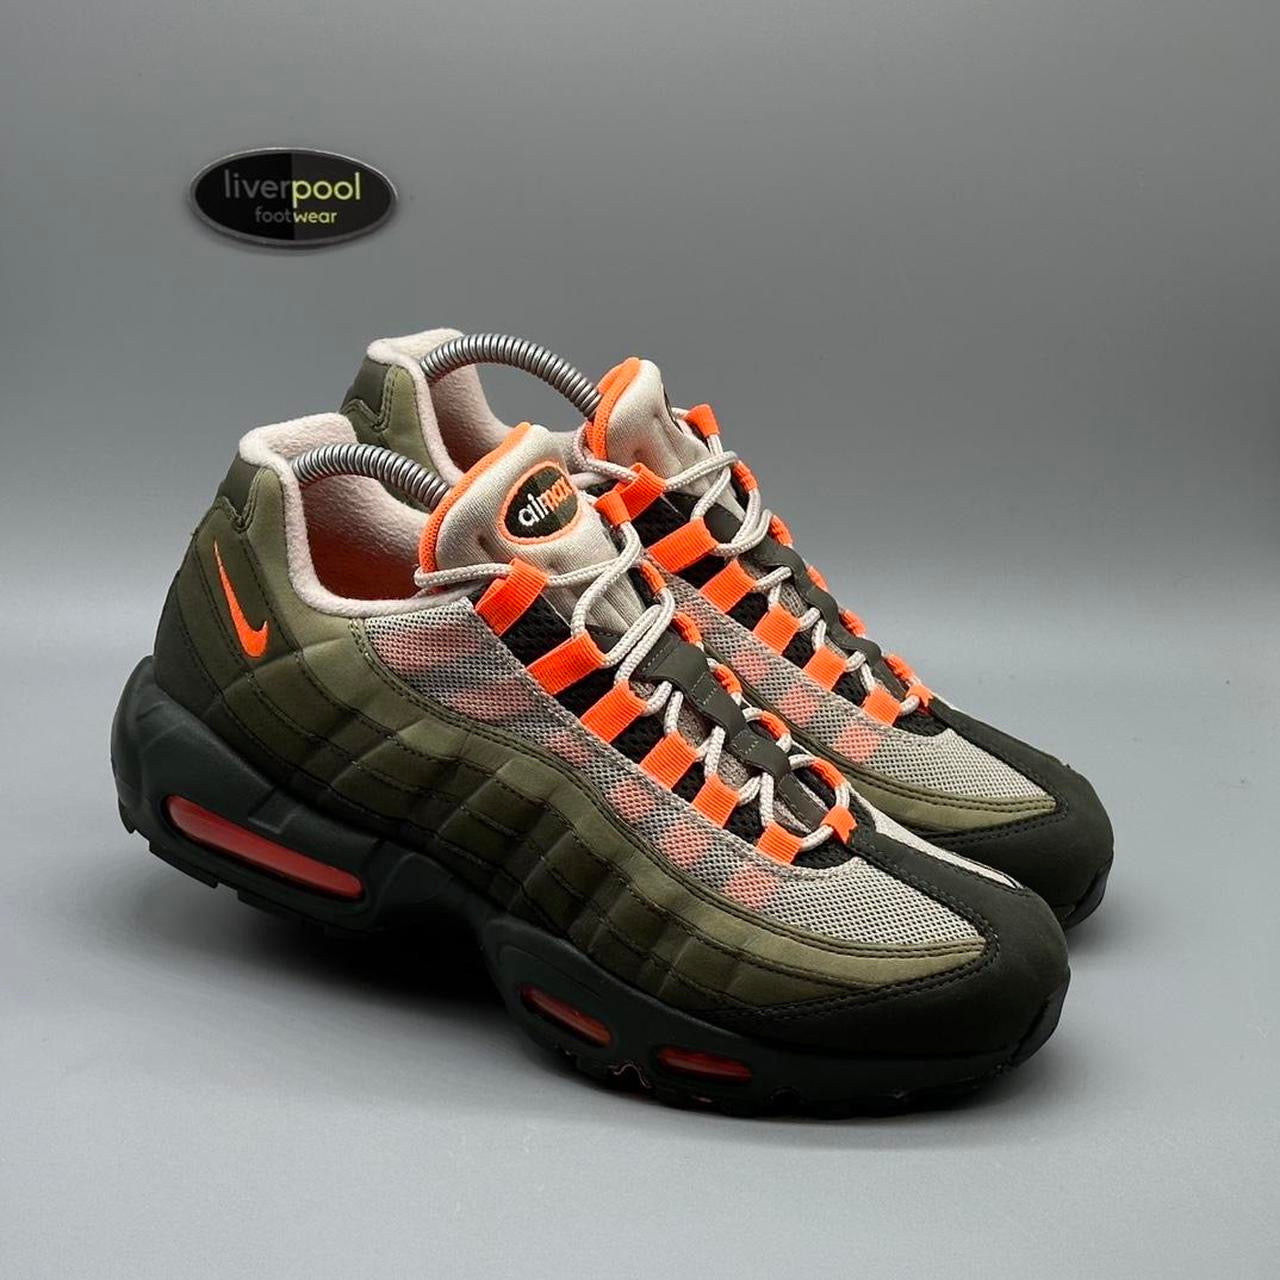 voor Universiteit stoomboot Nike Air Max 95 - Olive / Safety orange – Liverpool Footwear